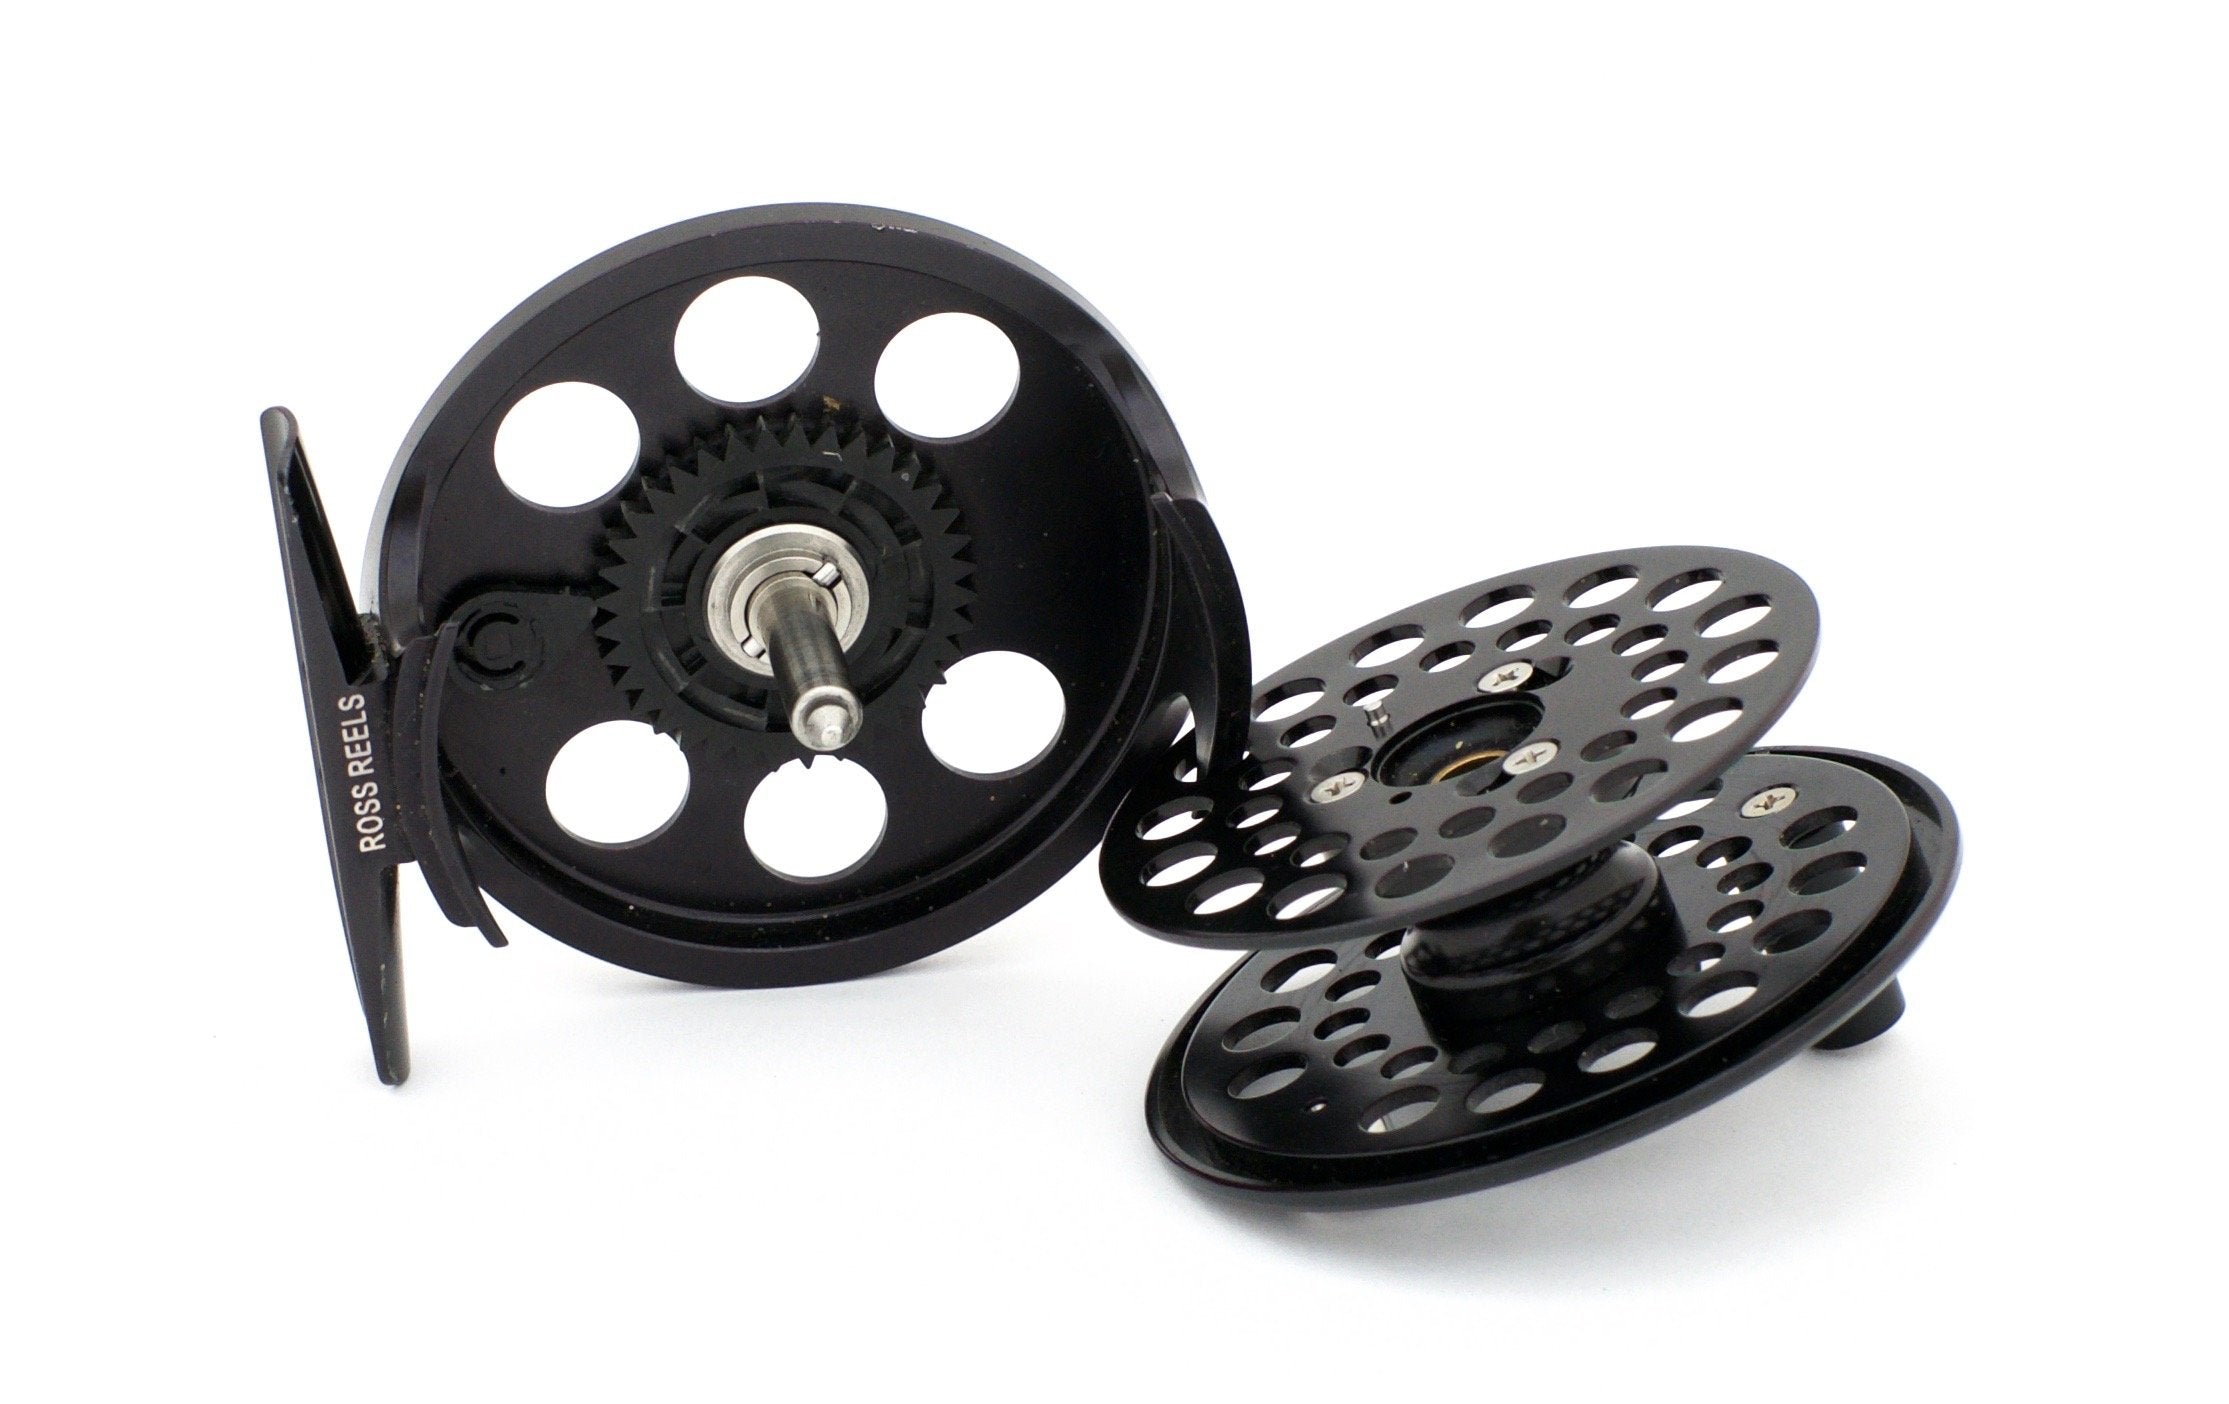  Ross Reels FlyStart Spool 1 Black - Fly Fishing Reel Spool  Only - Flystart Spool 1 - Black : Sports & Outdoors